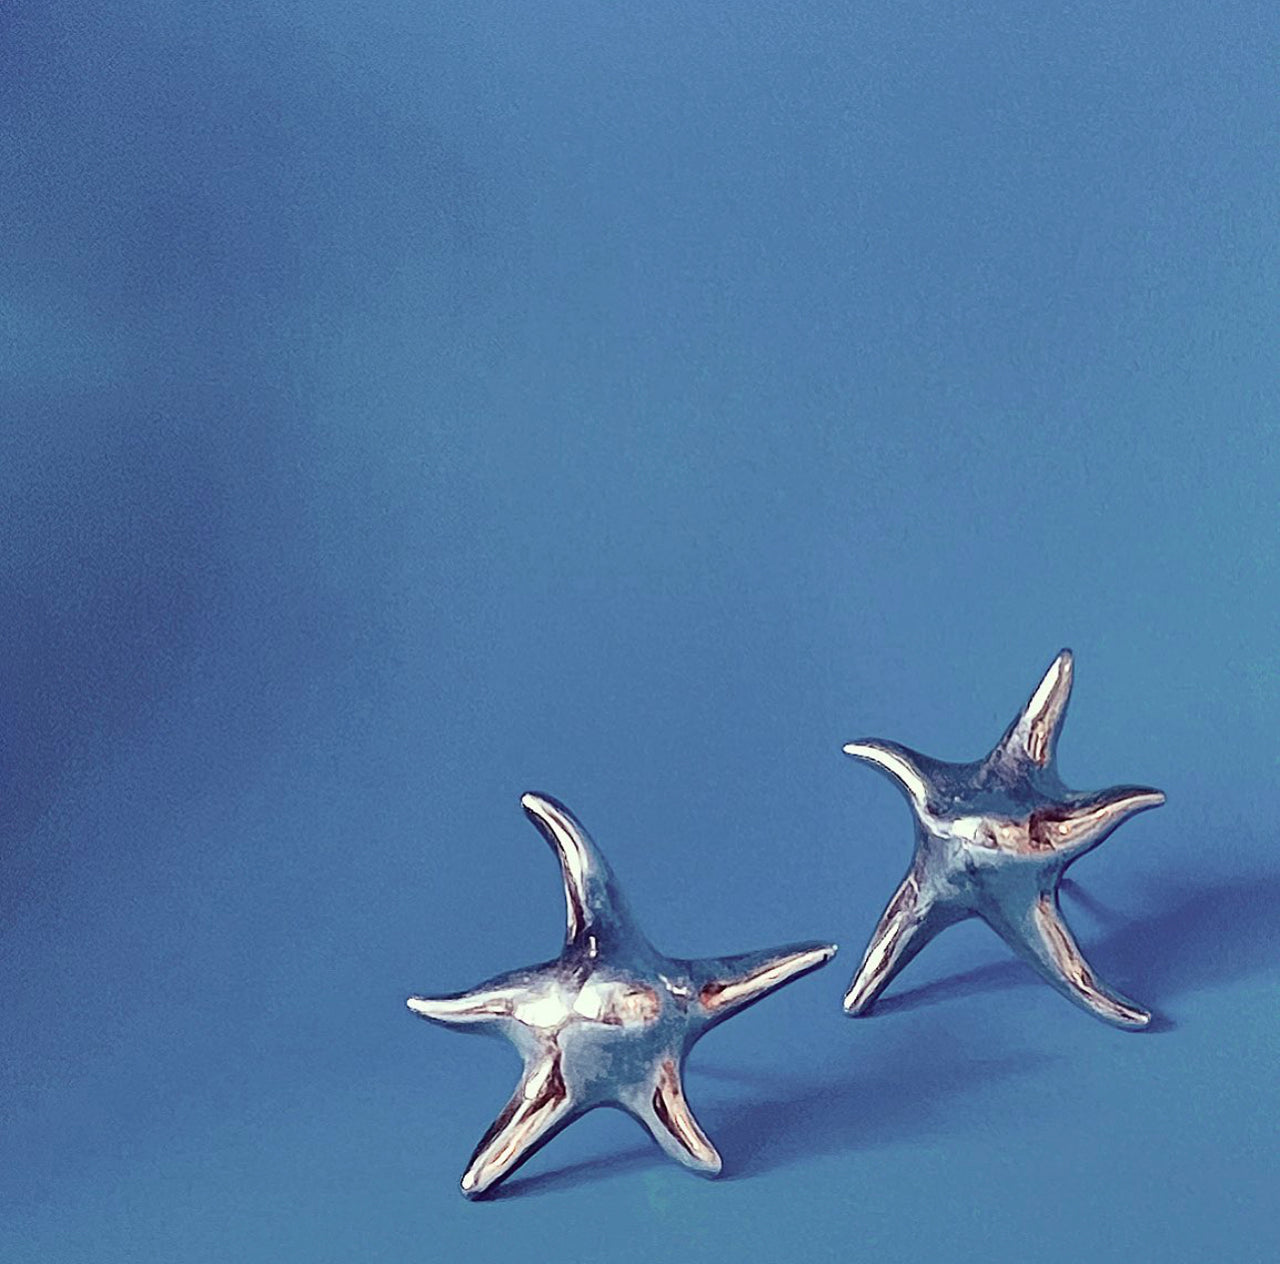 Patmos Stars earrings